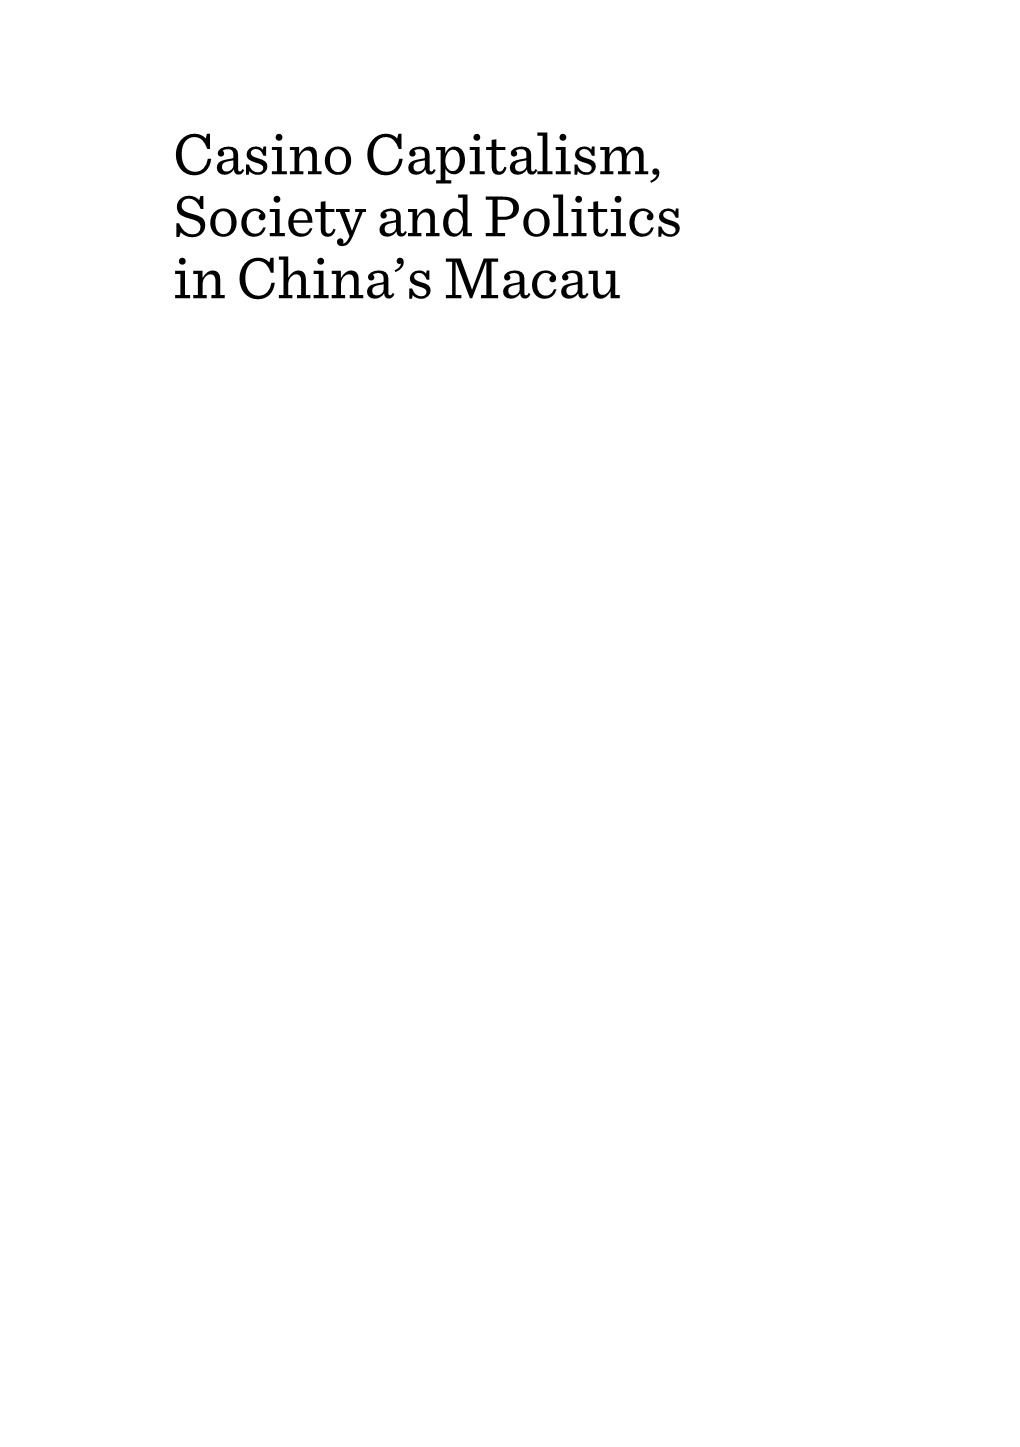 Casino Capitalism, Society and Politics in China's Macau